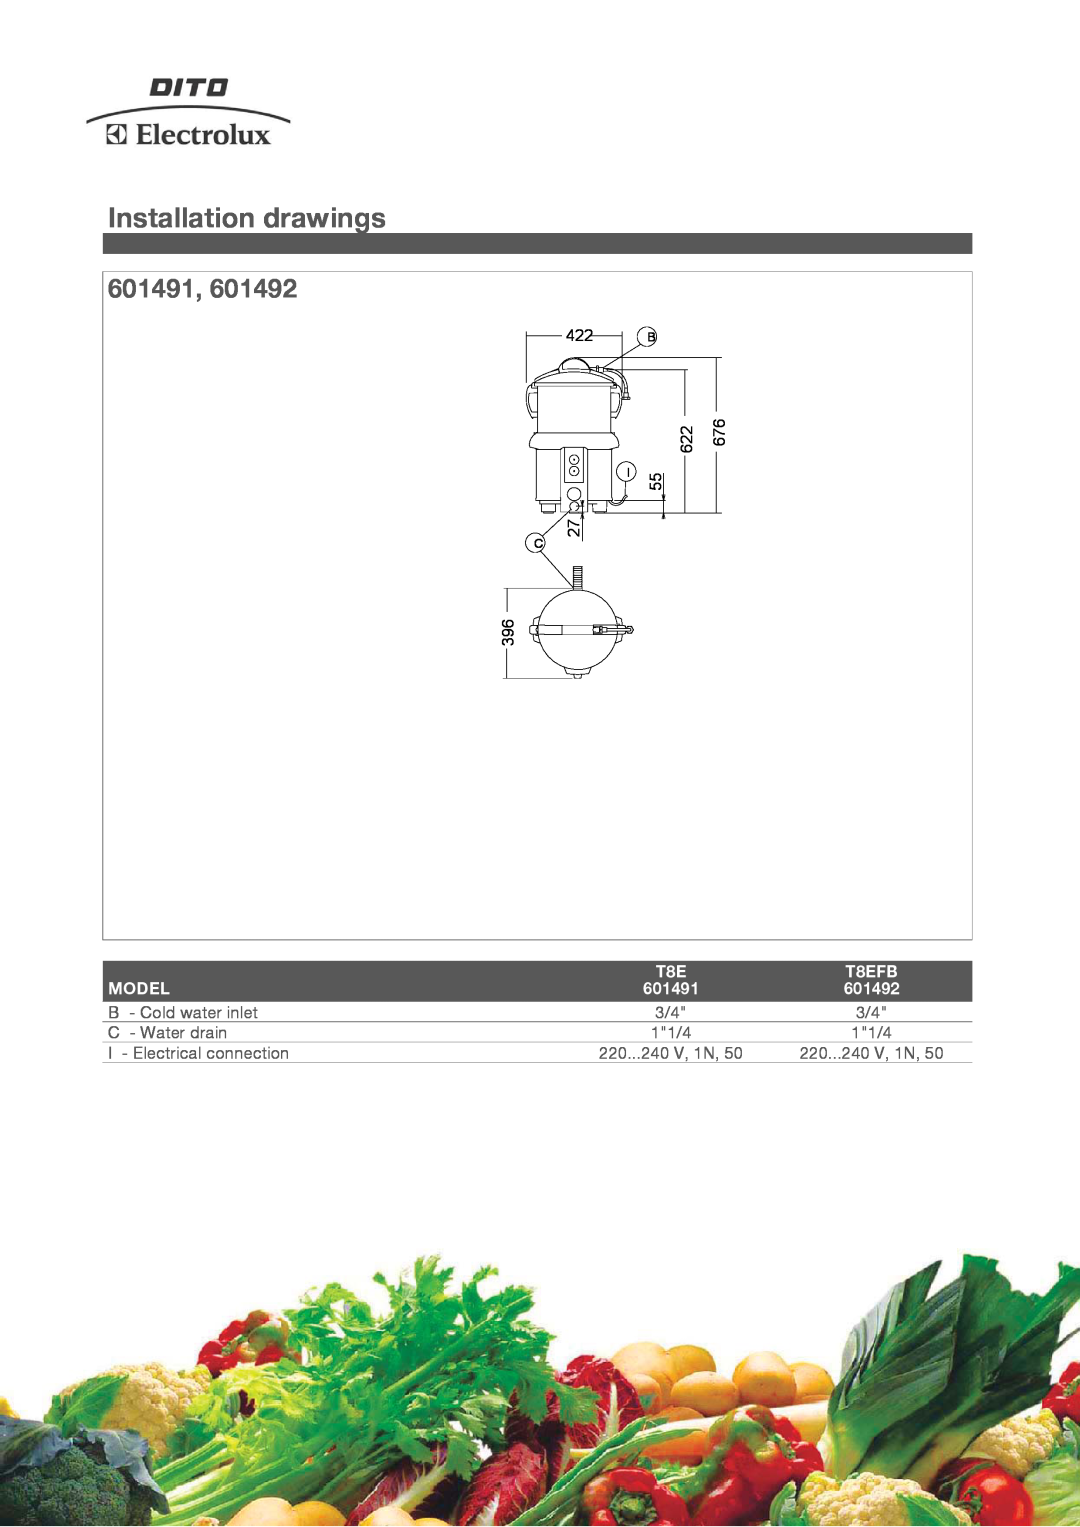 Electrolux 601491, 601492 manual Installation drawings, T8EFB, Model 